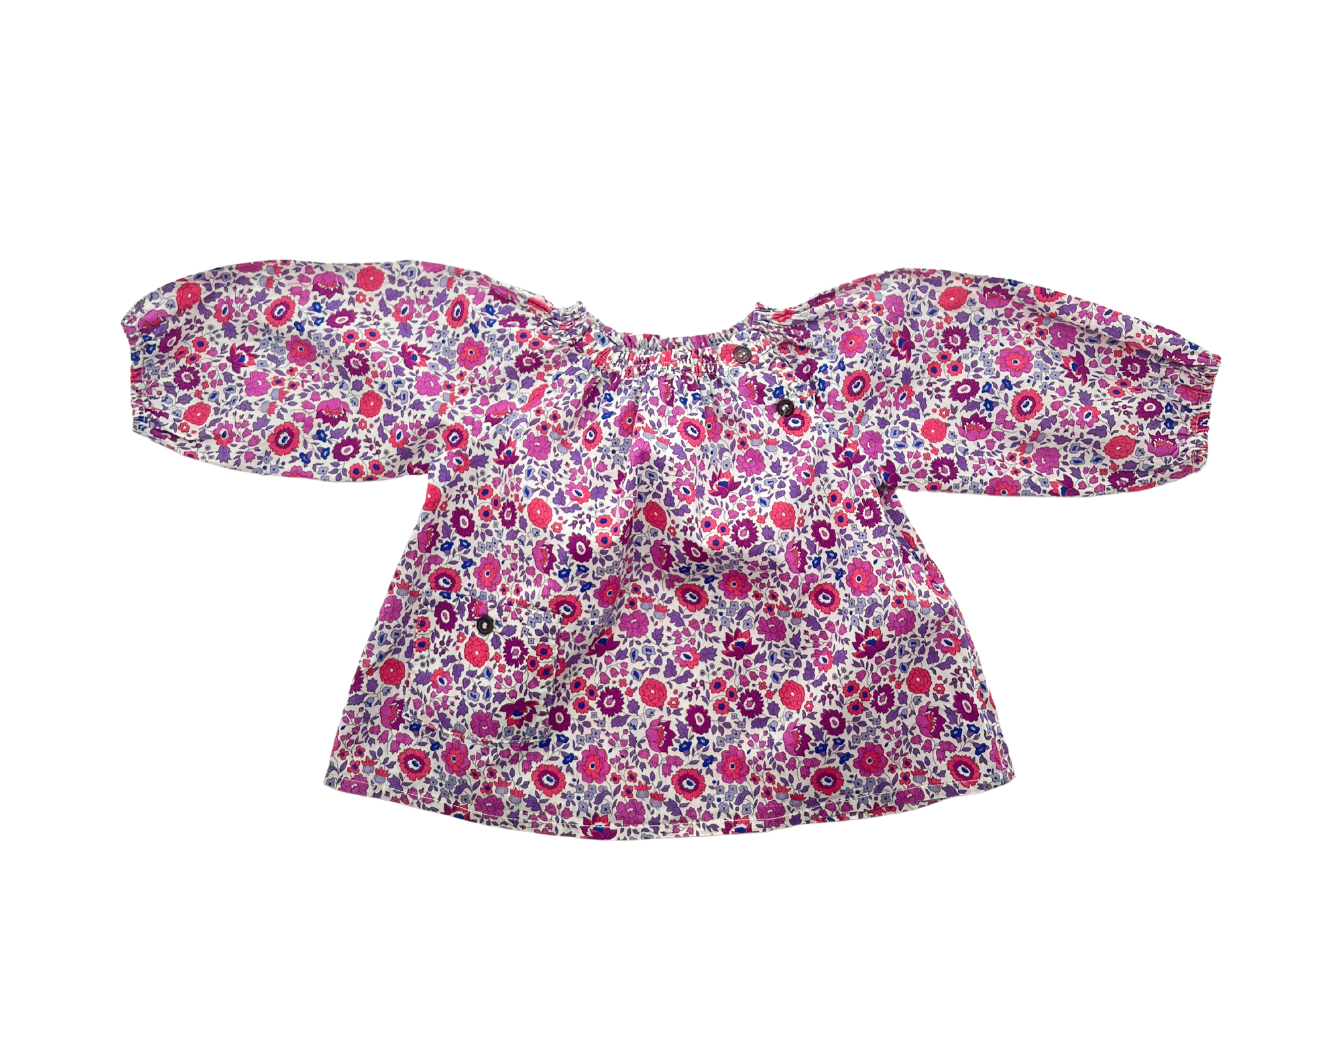 BONTON - Liberty floral blouse - 1 year old